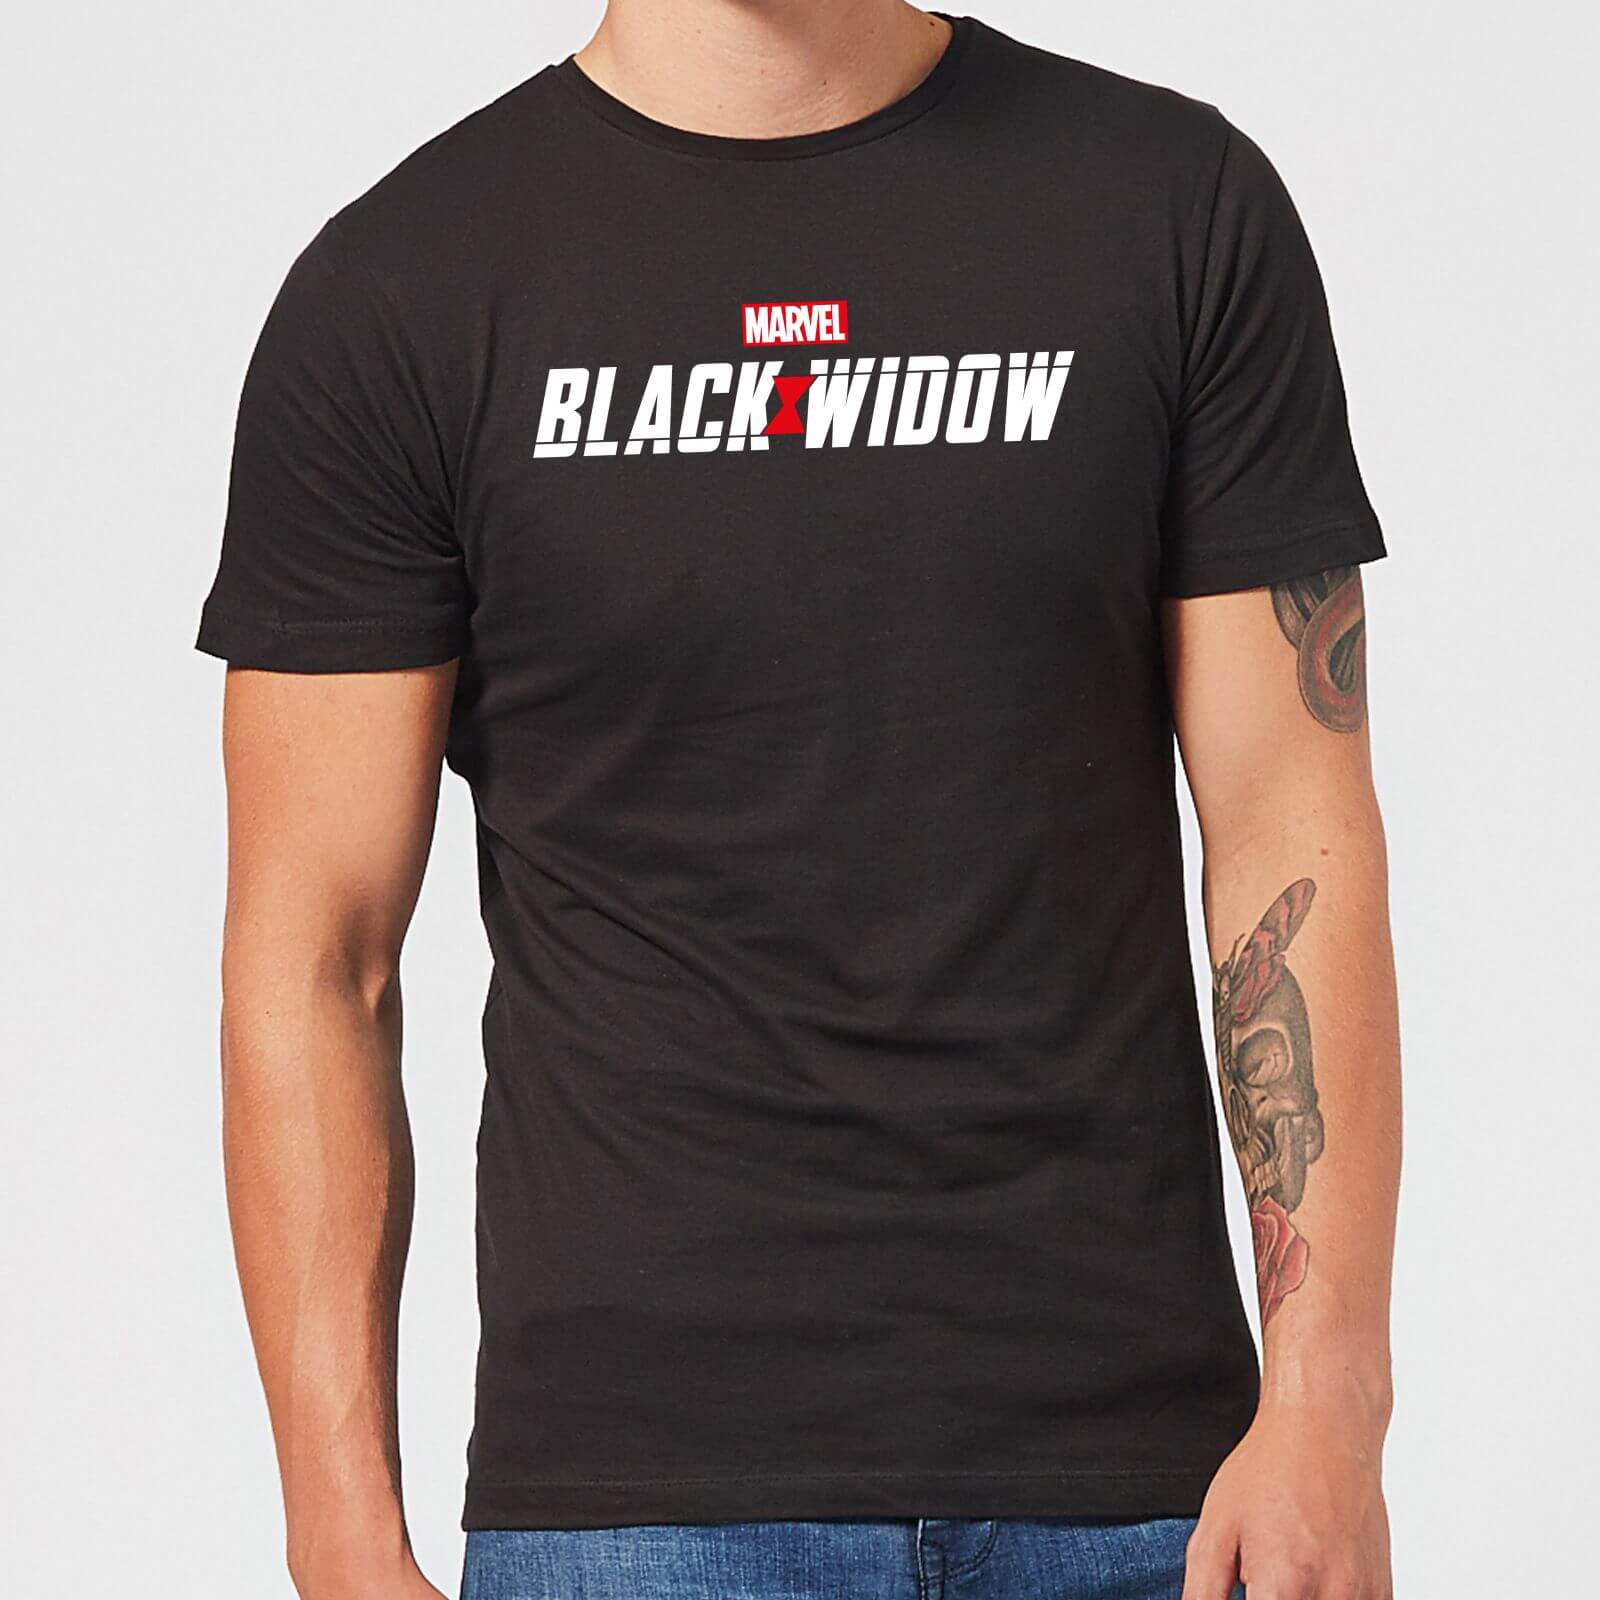 Black Widow Movie Logo Men's T-Shirt - Black - S - Black